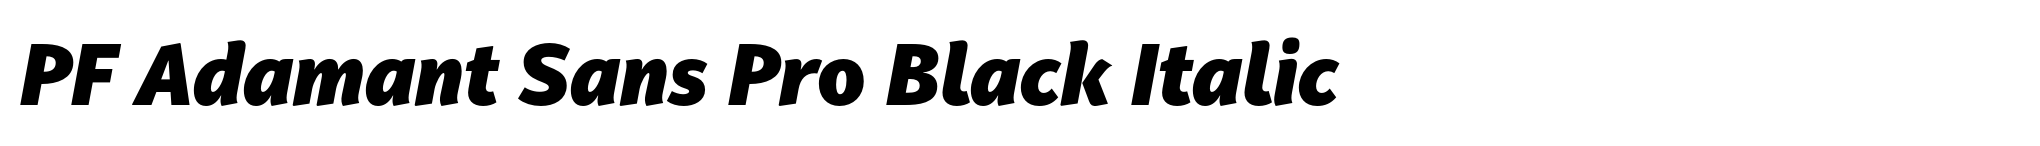 PF Adamant Sans Pro Black Italic image